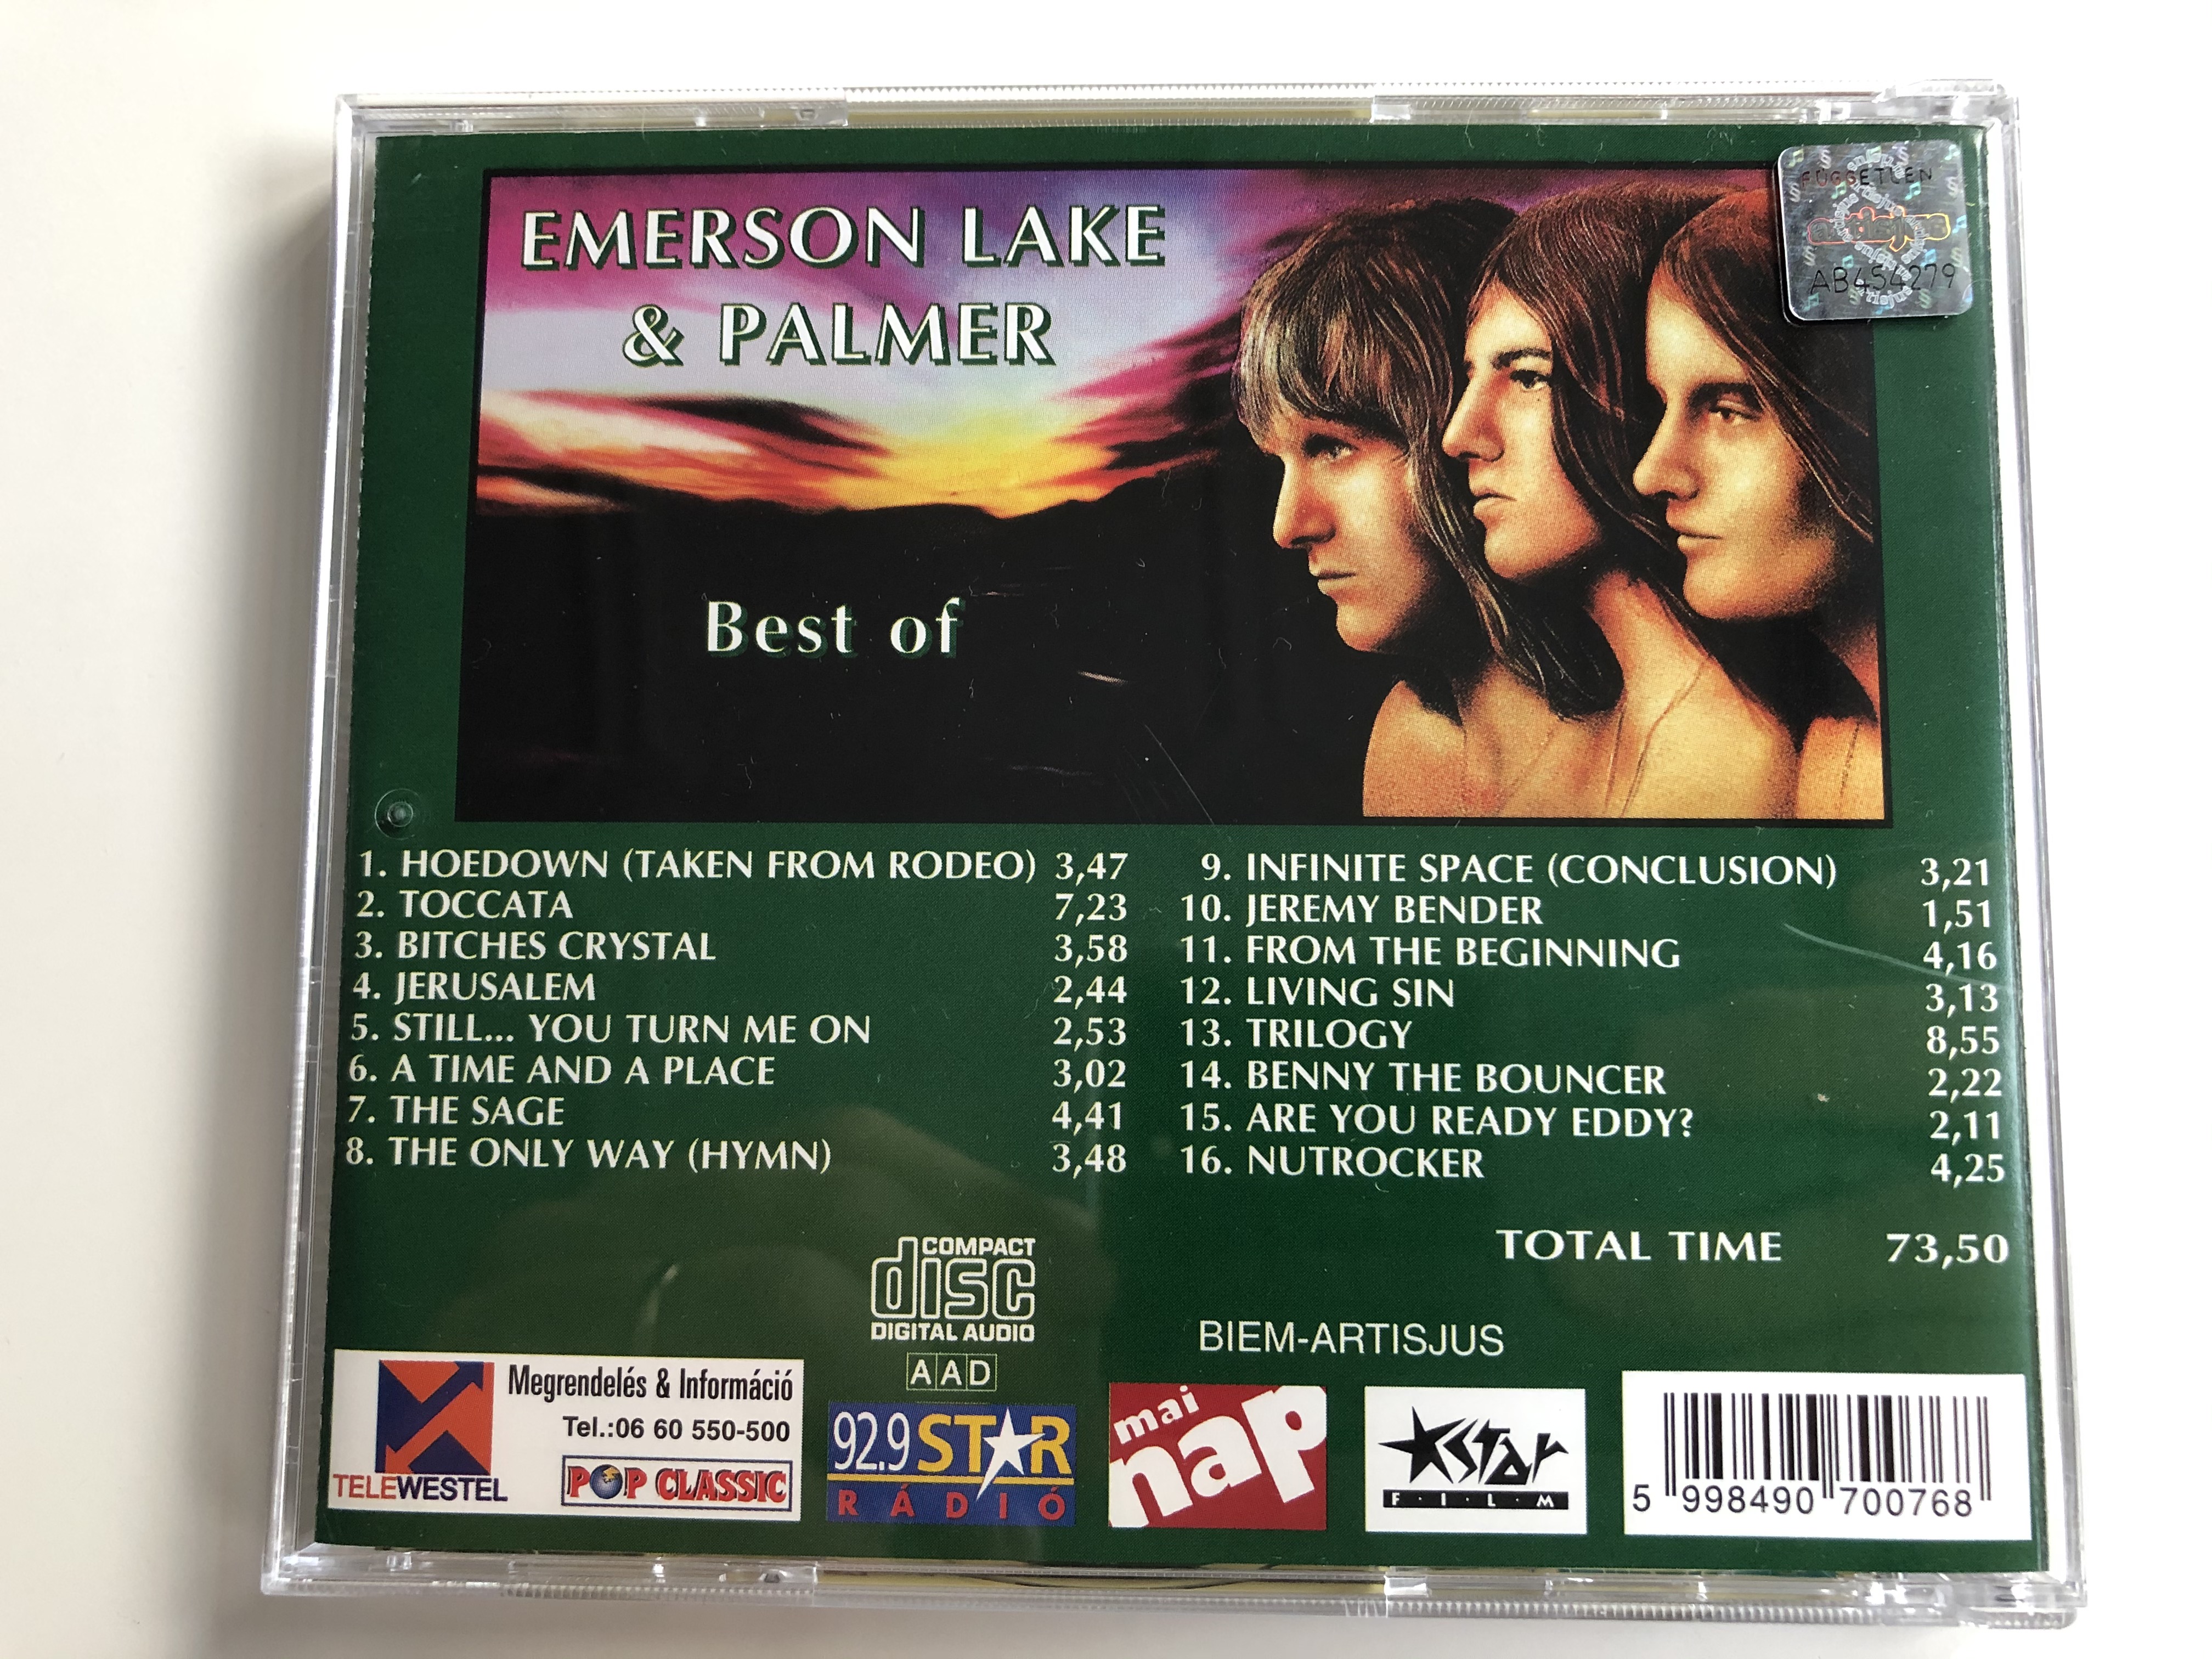 emerson-lake-palmer-best-of-total-time-73.50-pop-classic-euroton-audio-cd-eucd-0076-4-.jpg